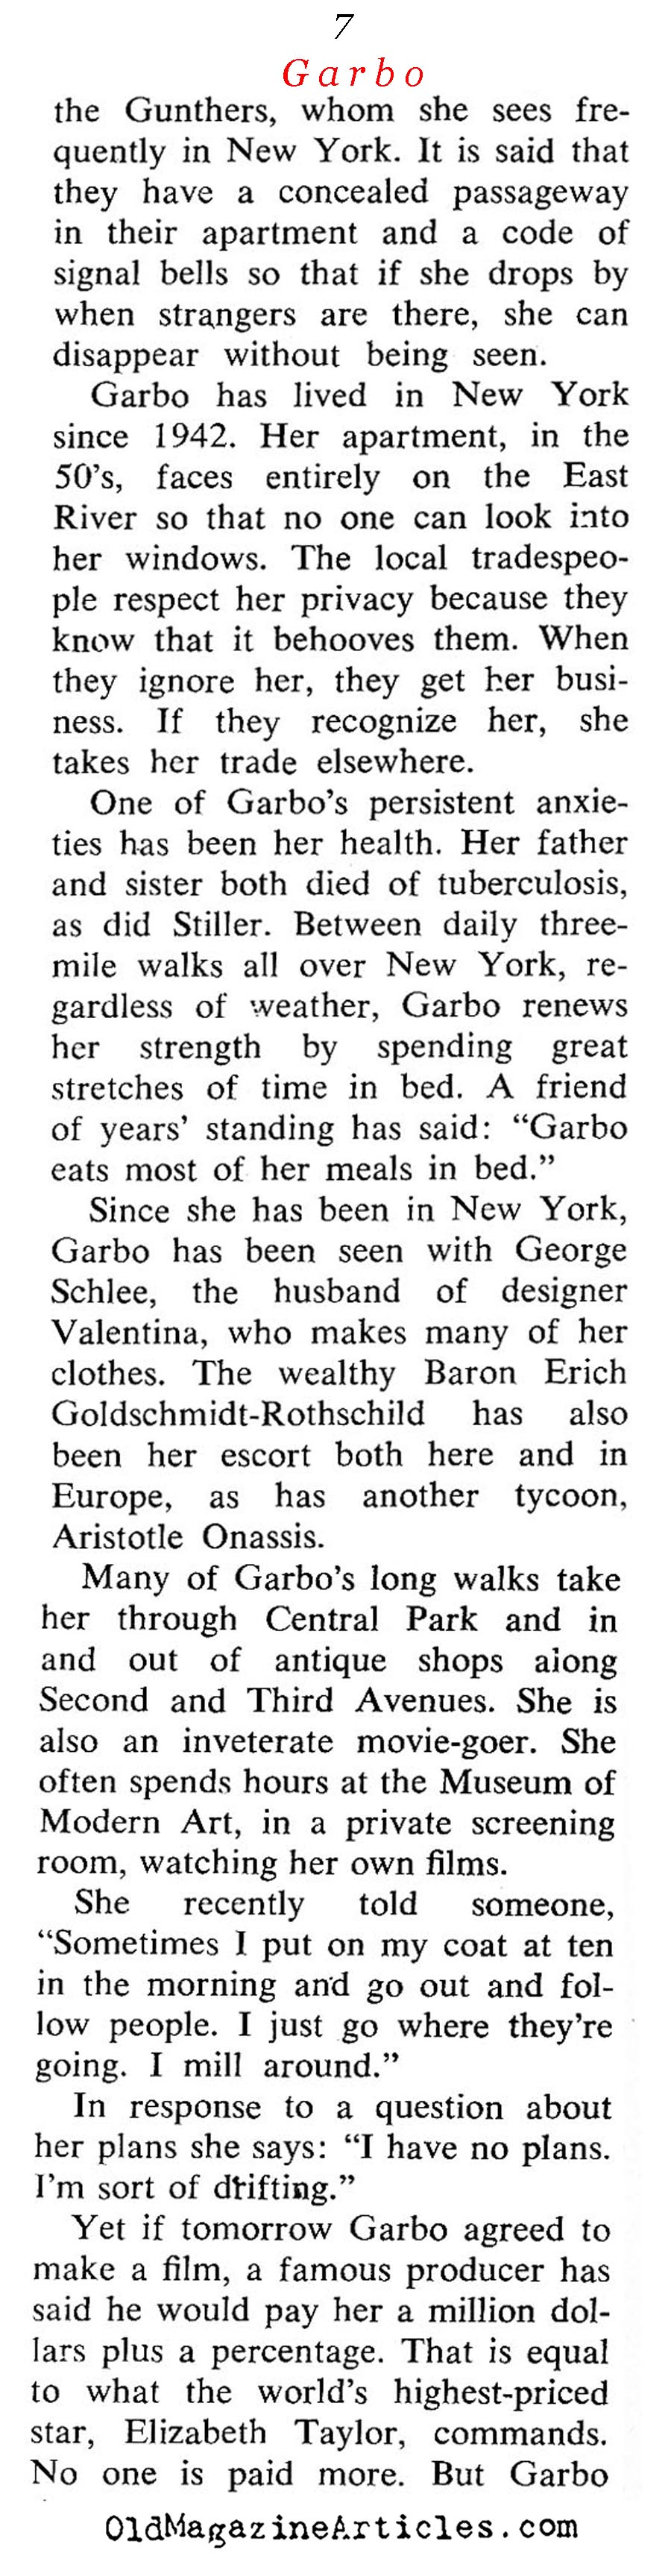 She Had that Thing (Coronet Magazine, 1964)